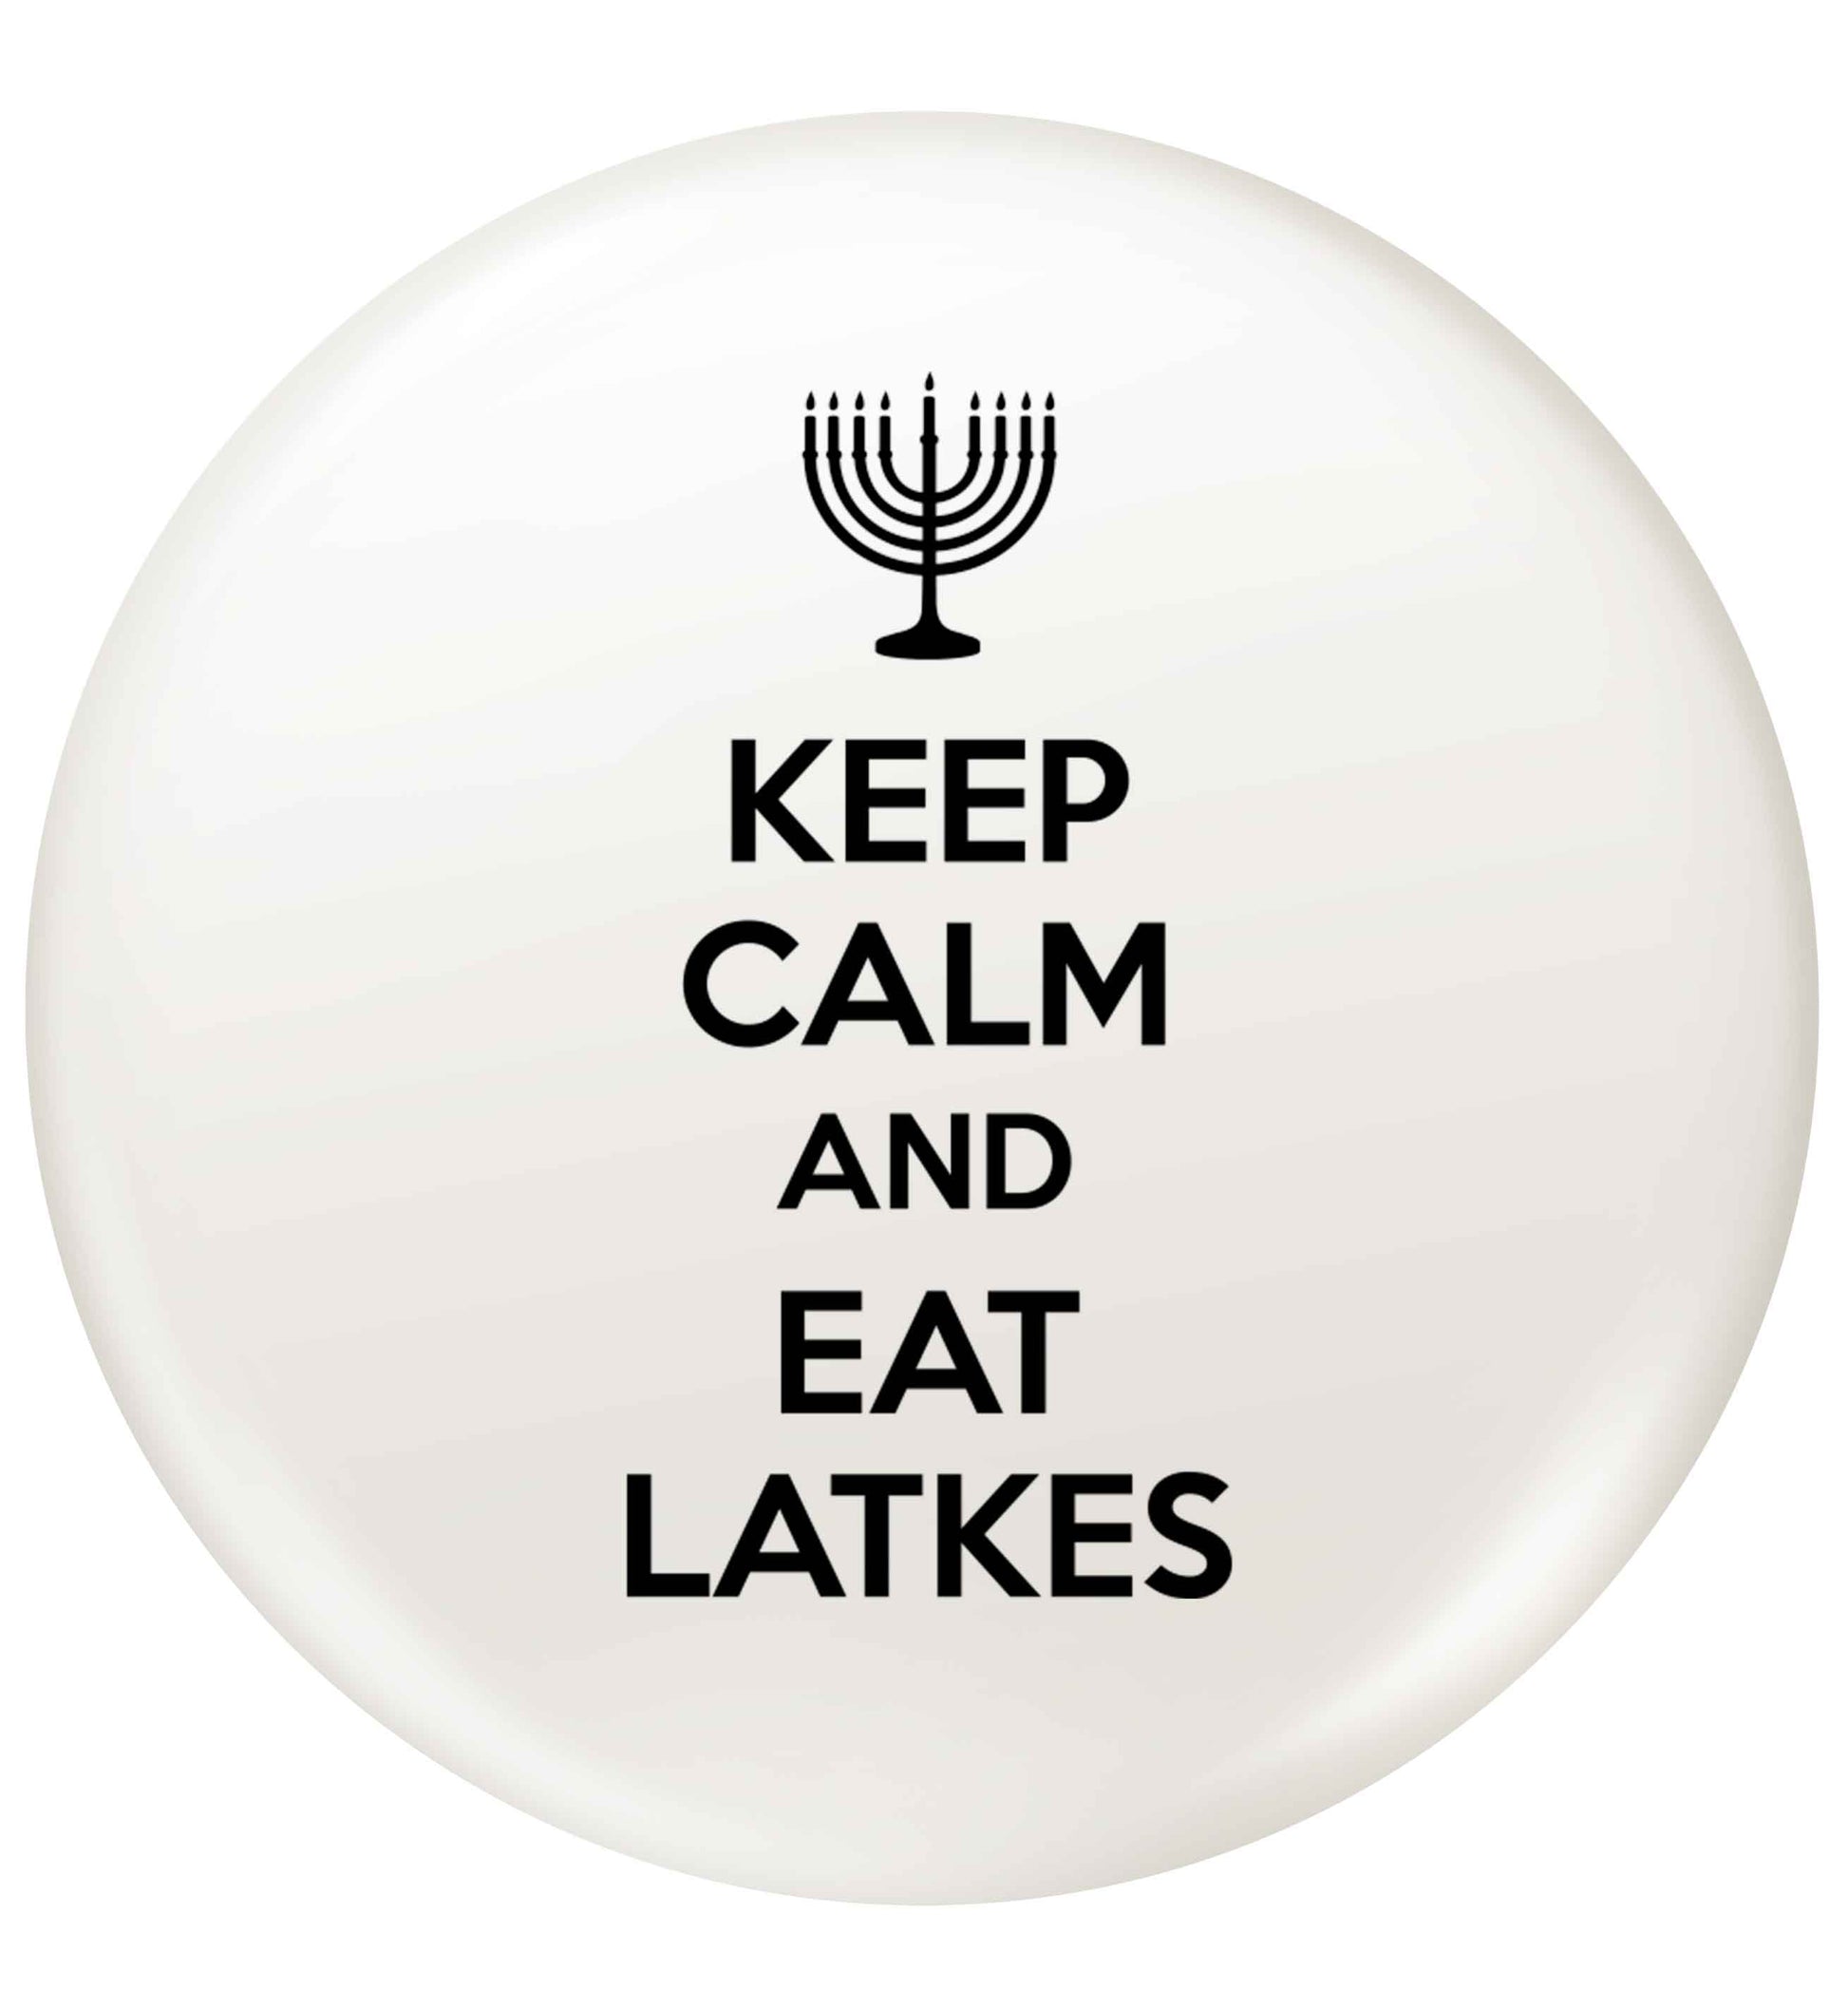 Keep calm and eat latkes small 25mm Pin badge